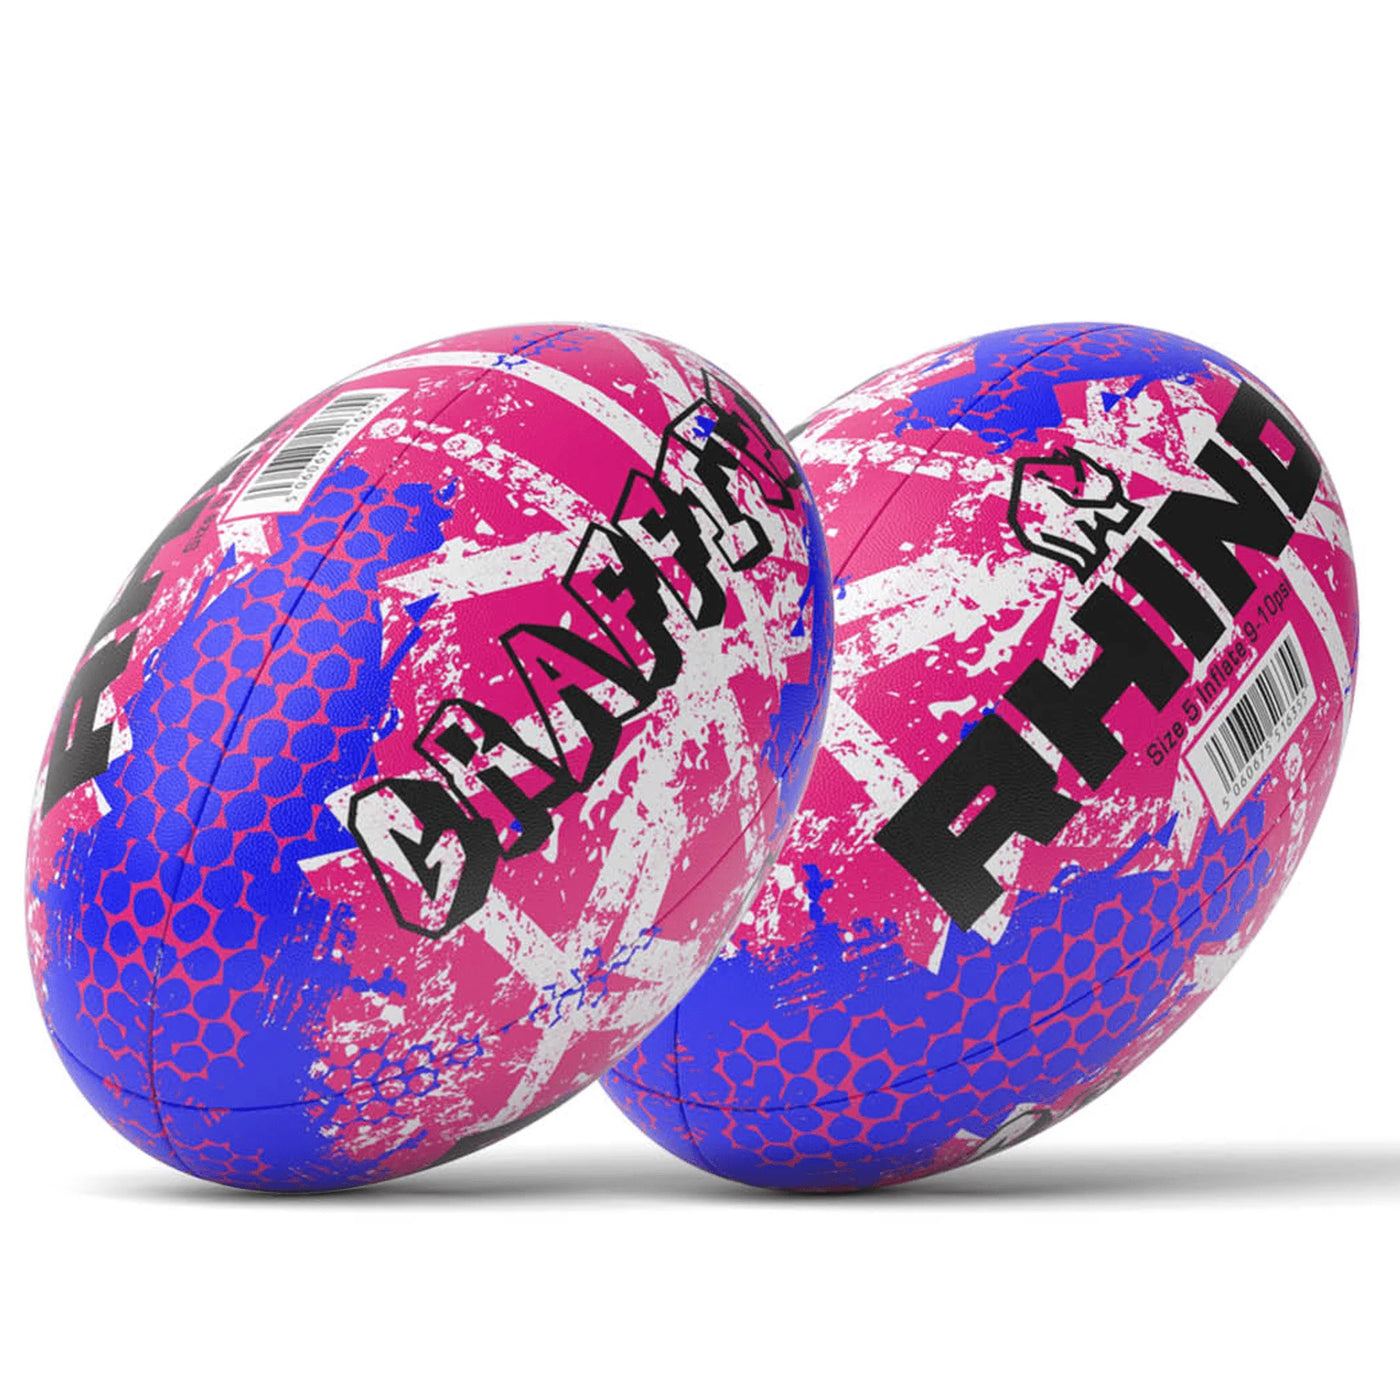 Rhino Graffiti Rugby Ball Size 5